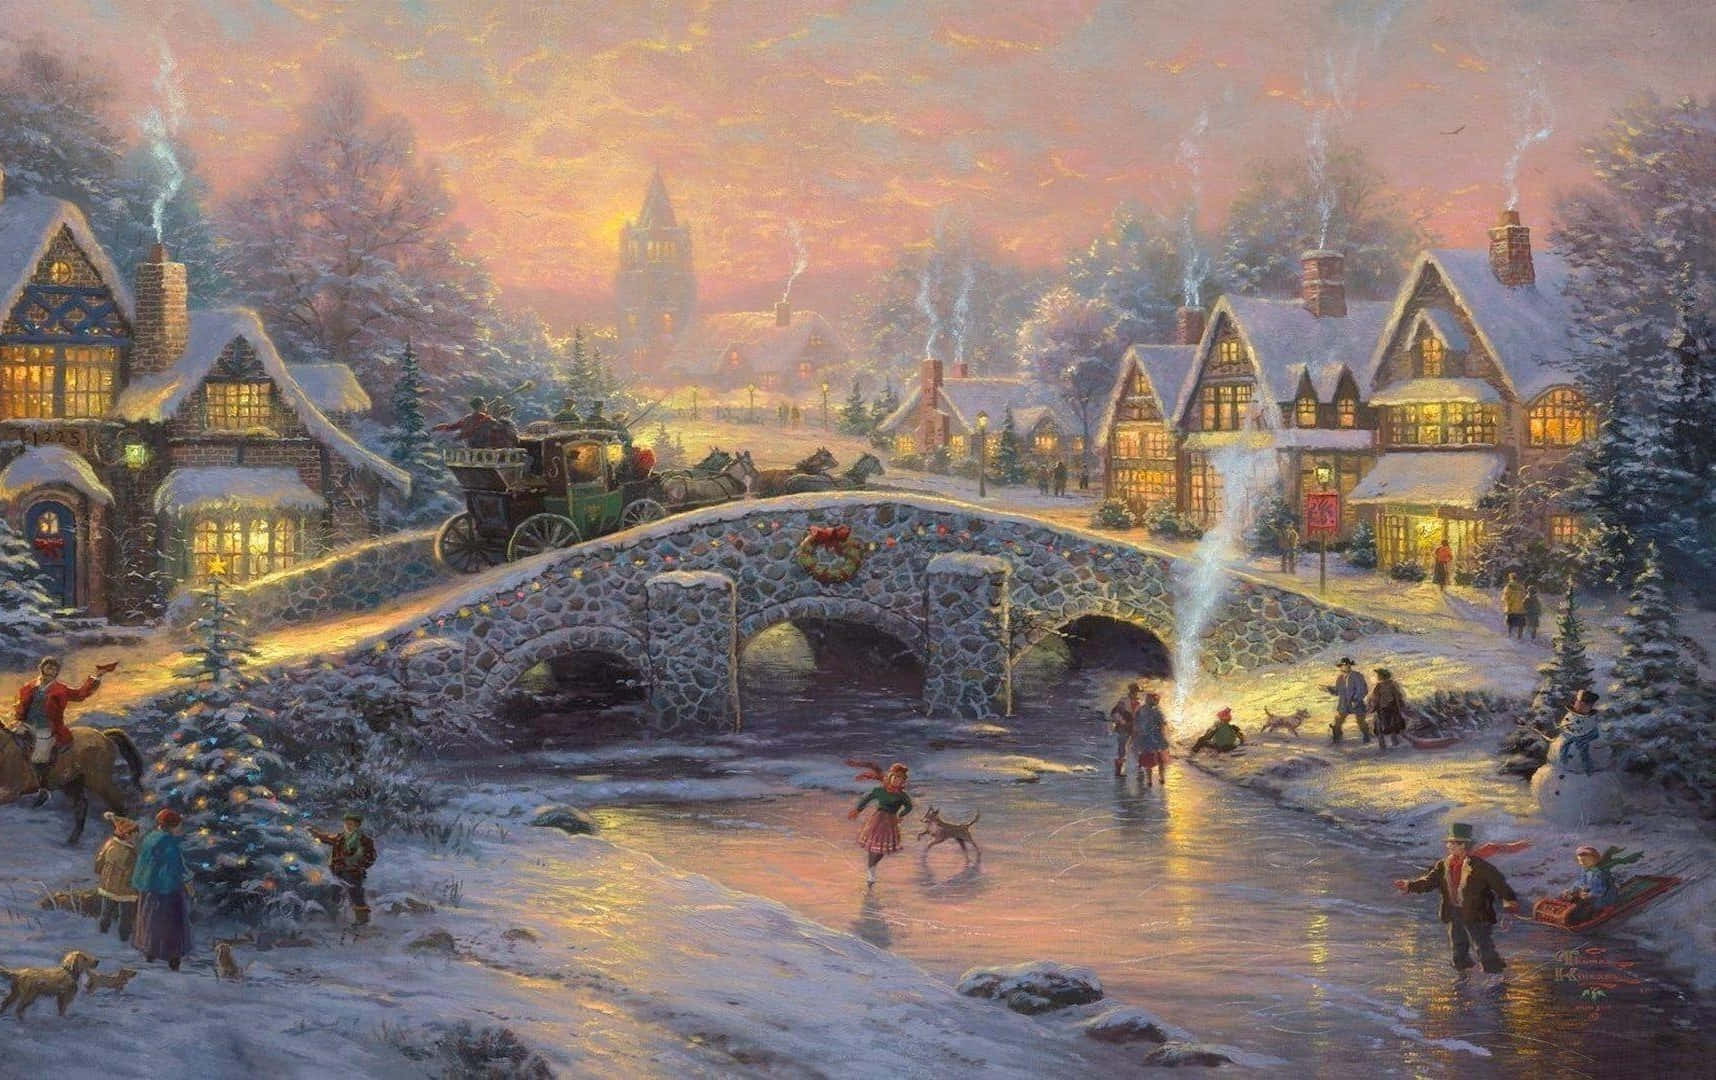 Snowy Winter Wonderland Painting Wallpaper